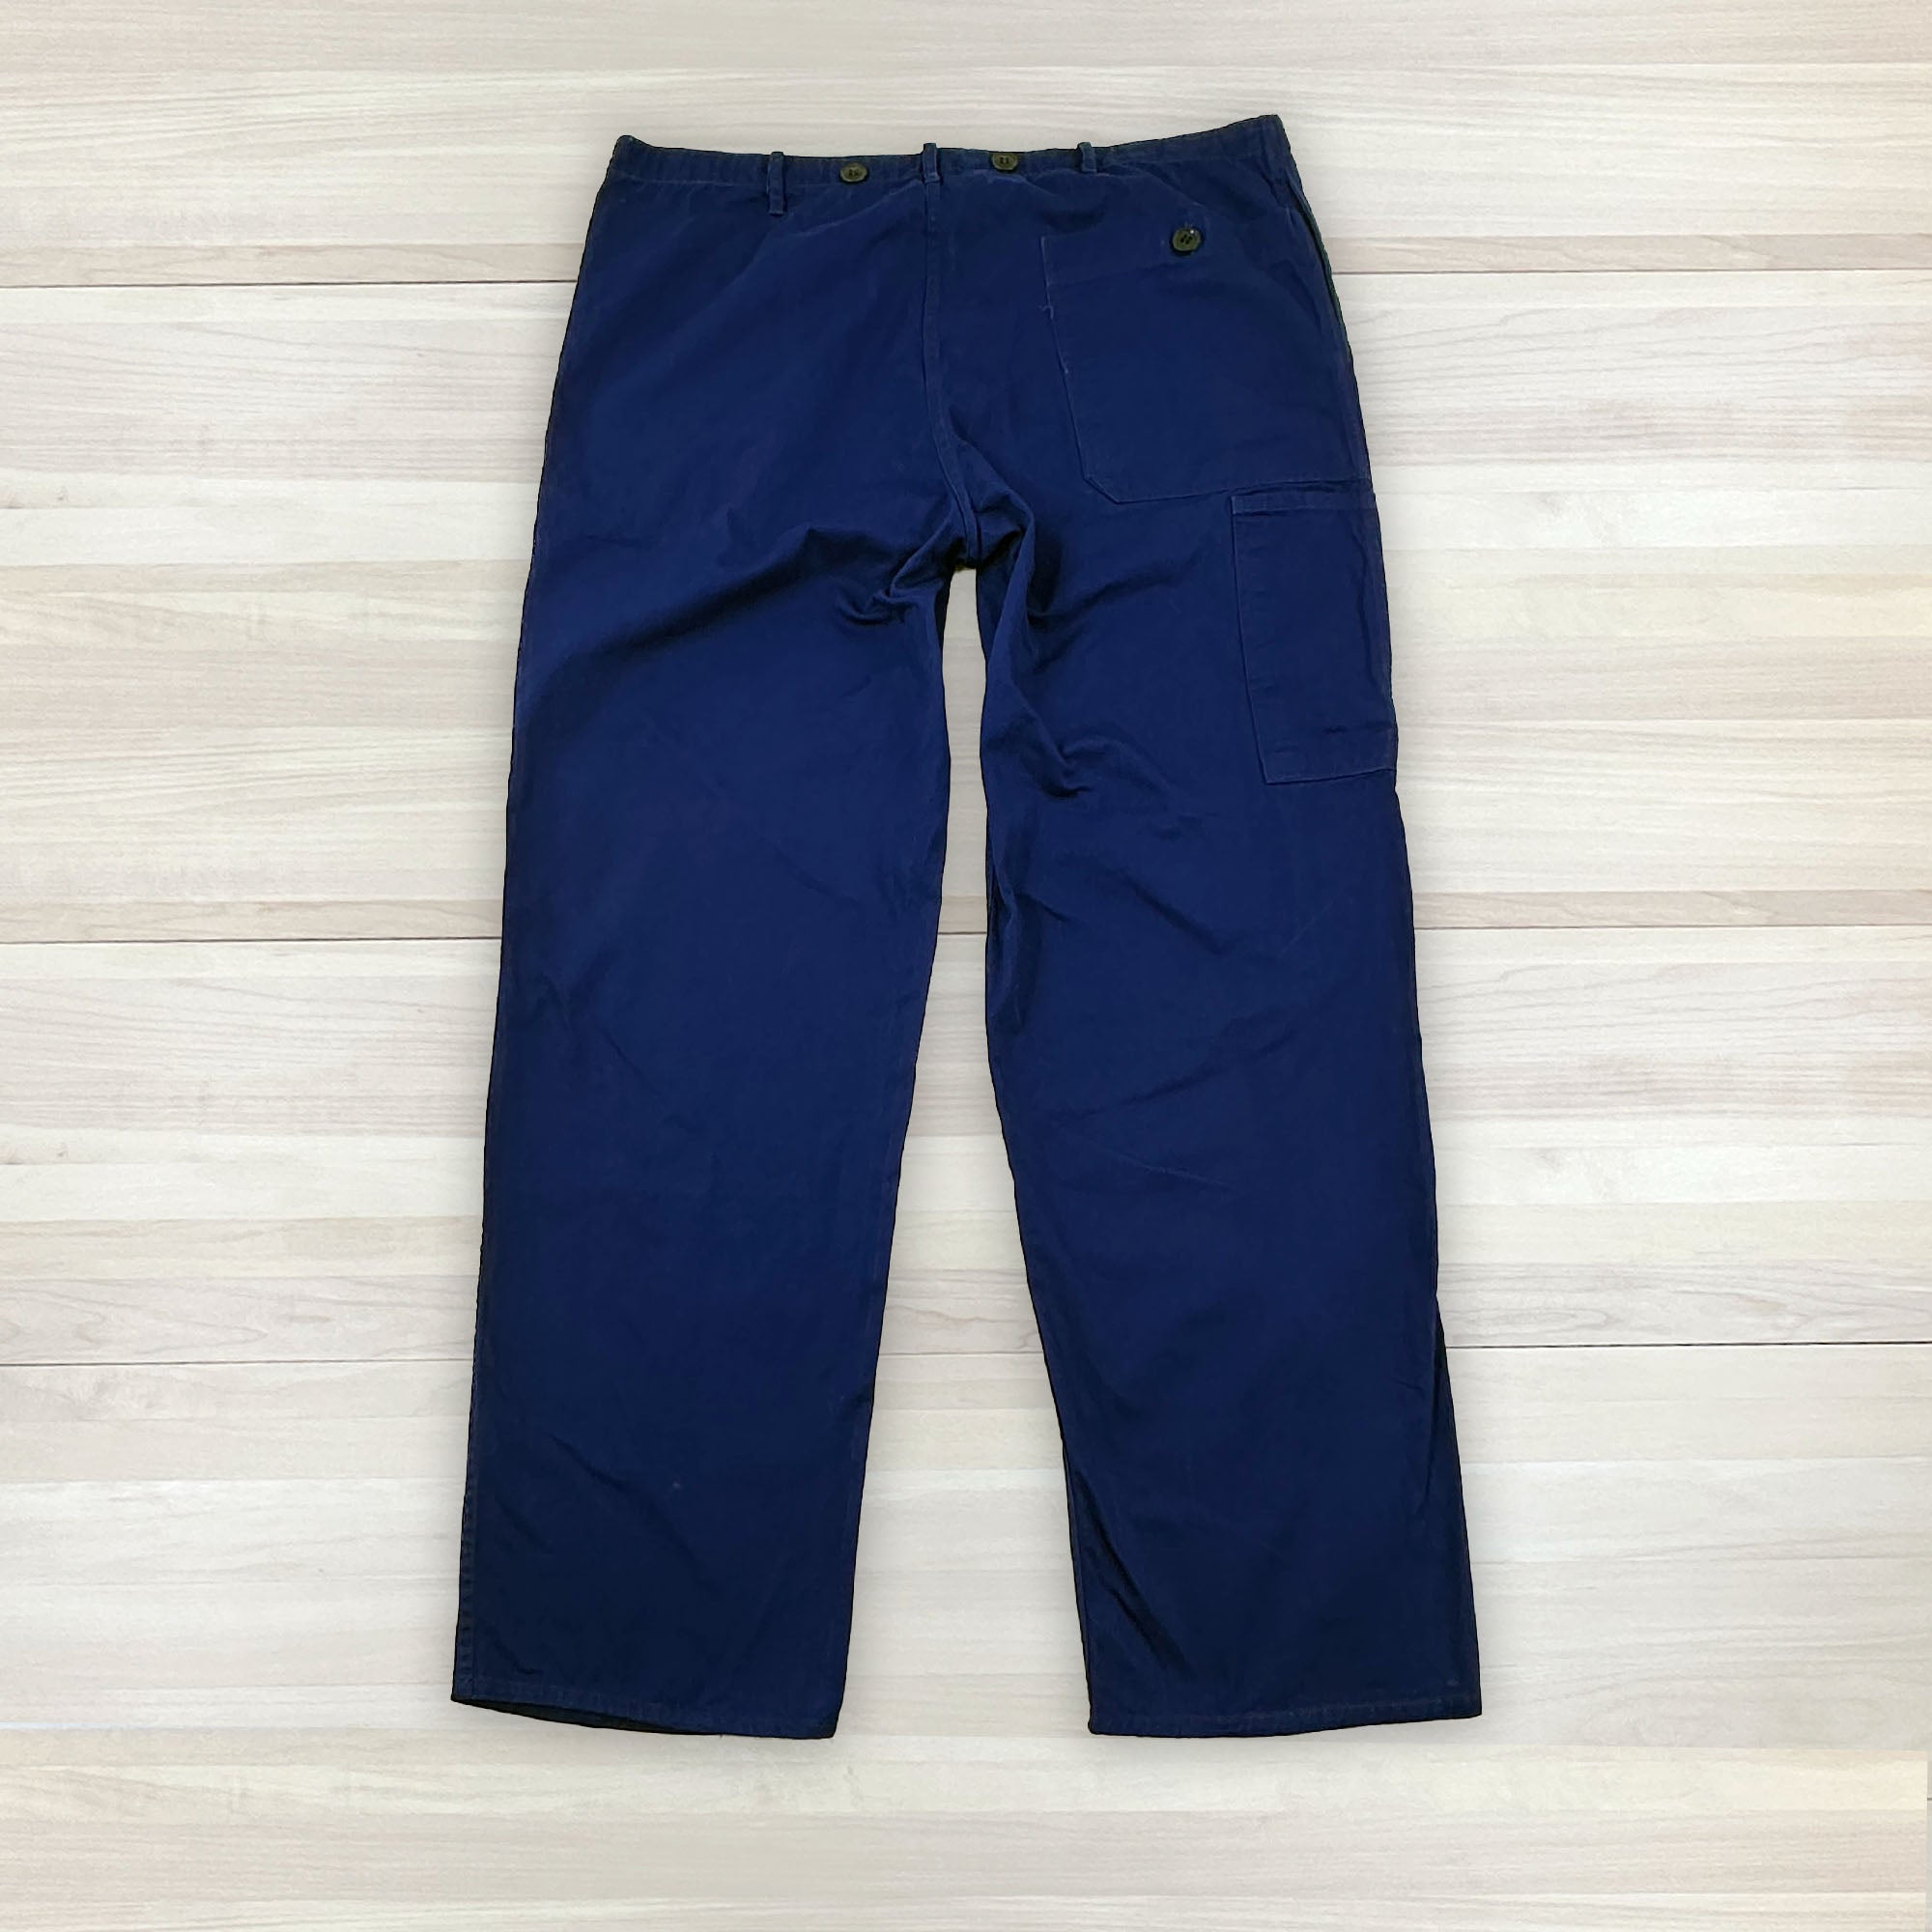 Vintage bleu de travail work pants 38x31 - 0